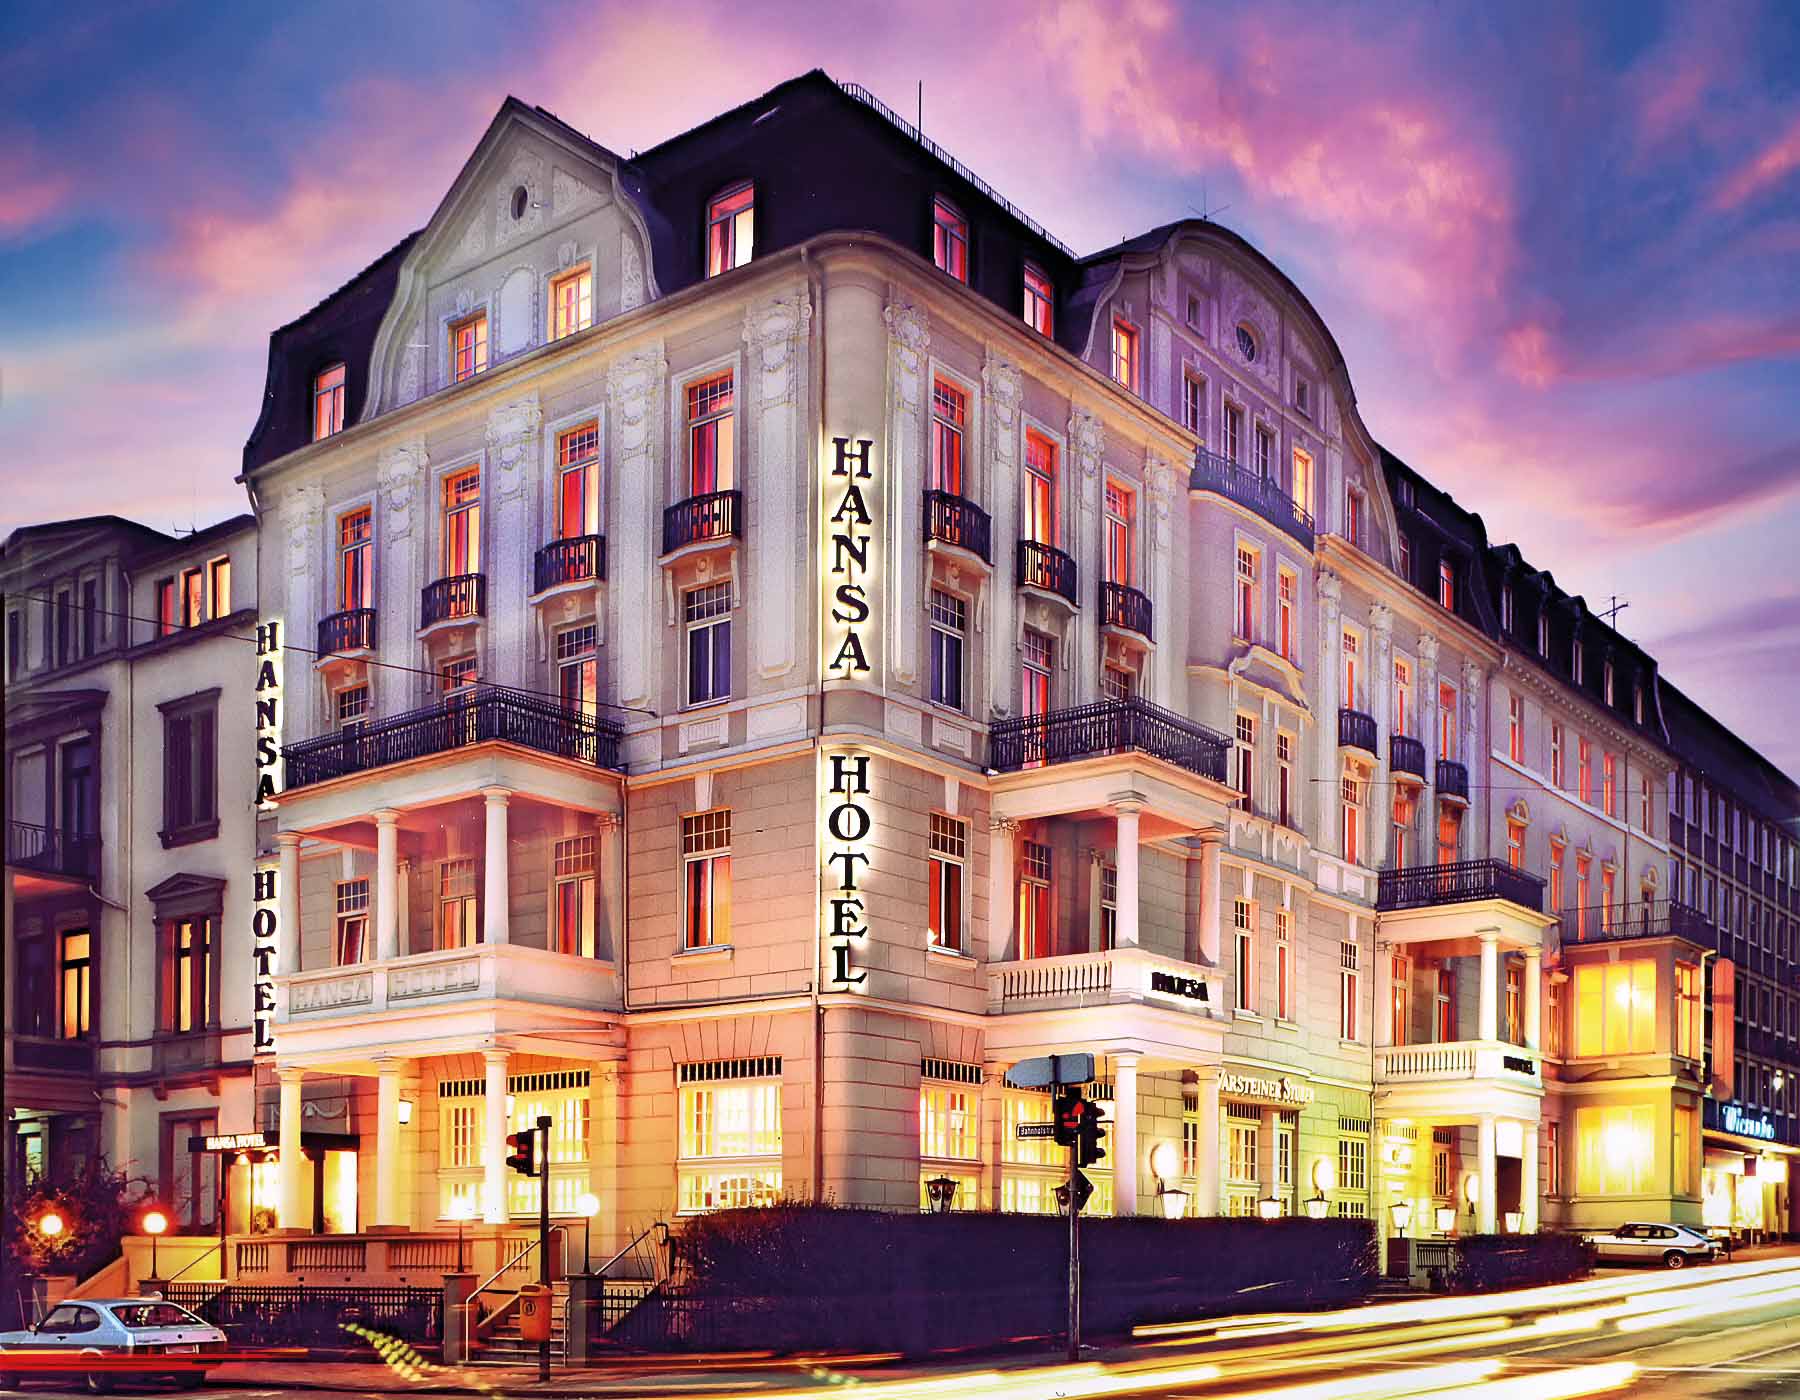 Star-Apart Hansa Hotel, Wiesbaden